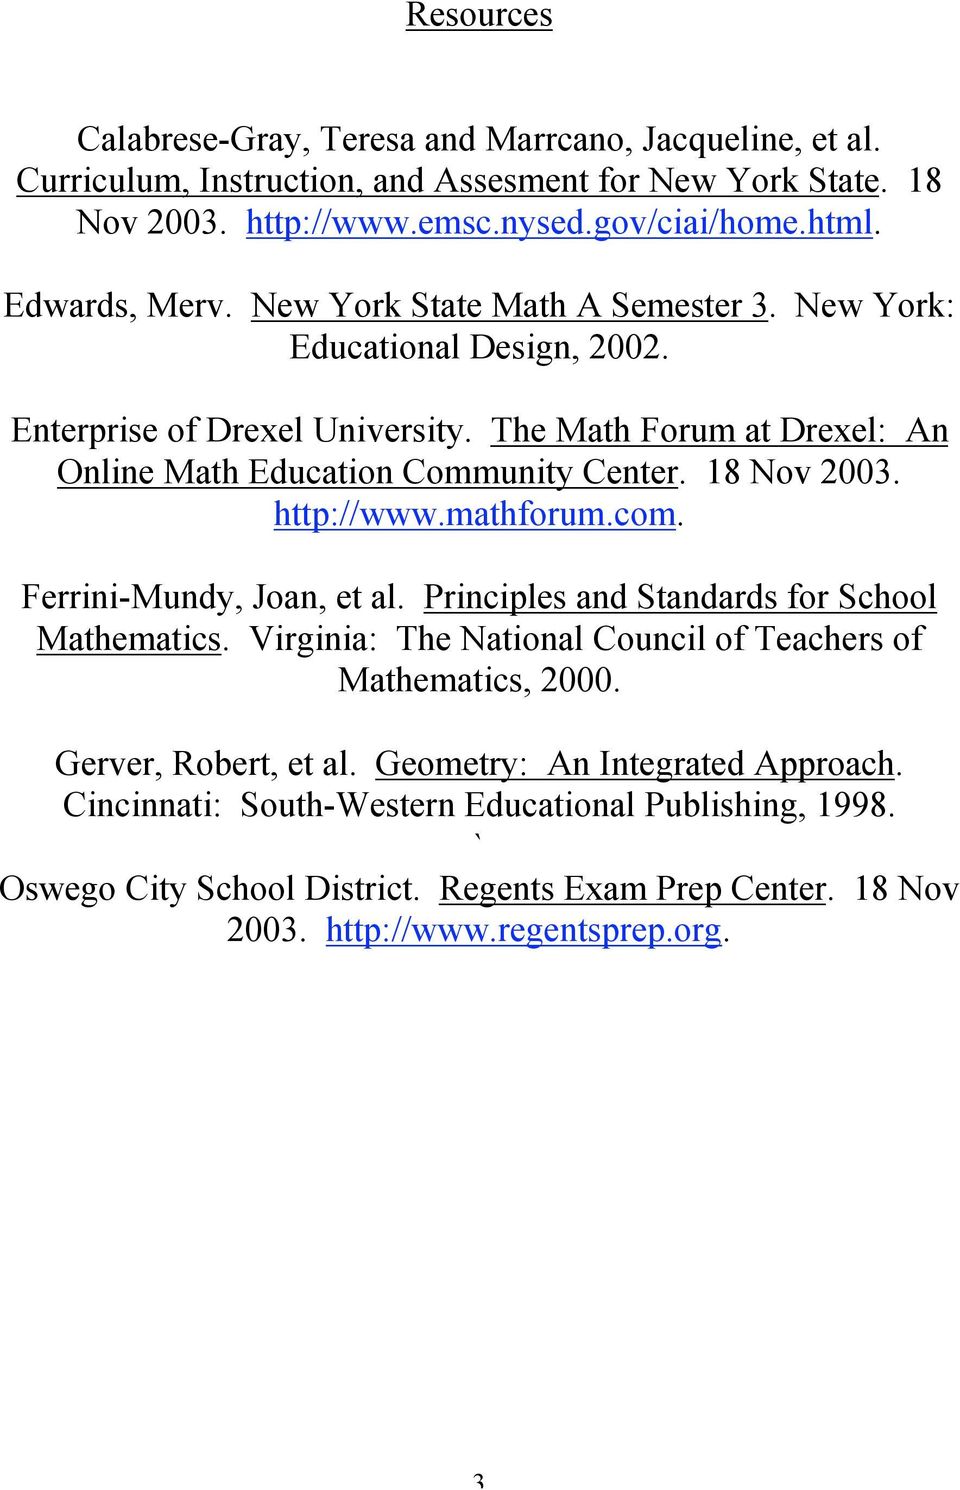 18 Nov 2003. http://www.mathforum.com. Ferrini-Mundy, Joan, et al. Principles and Standards for School Mathematics. Virginia: The National Council of Teachers of Mathematics, 2000.